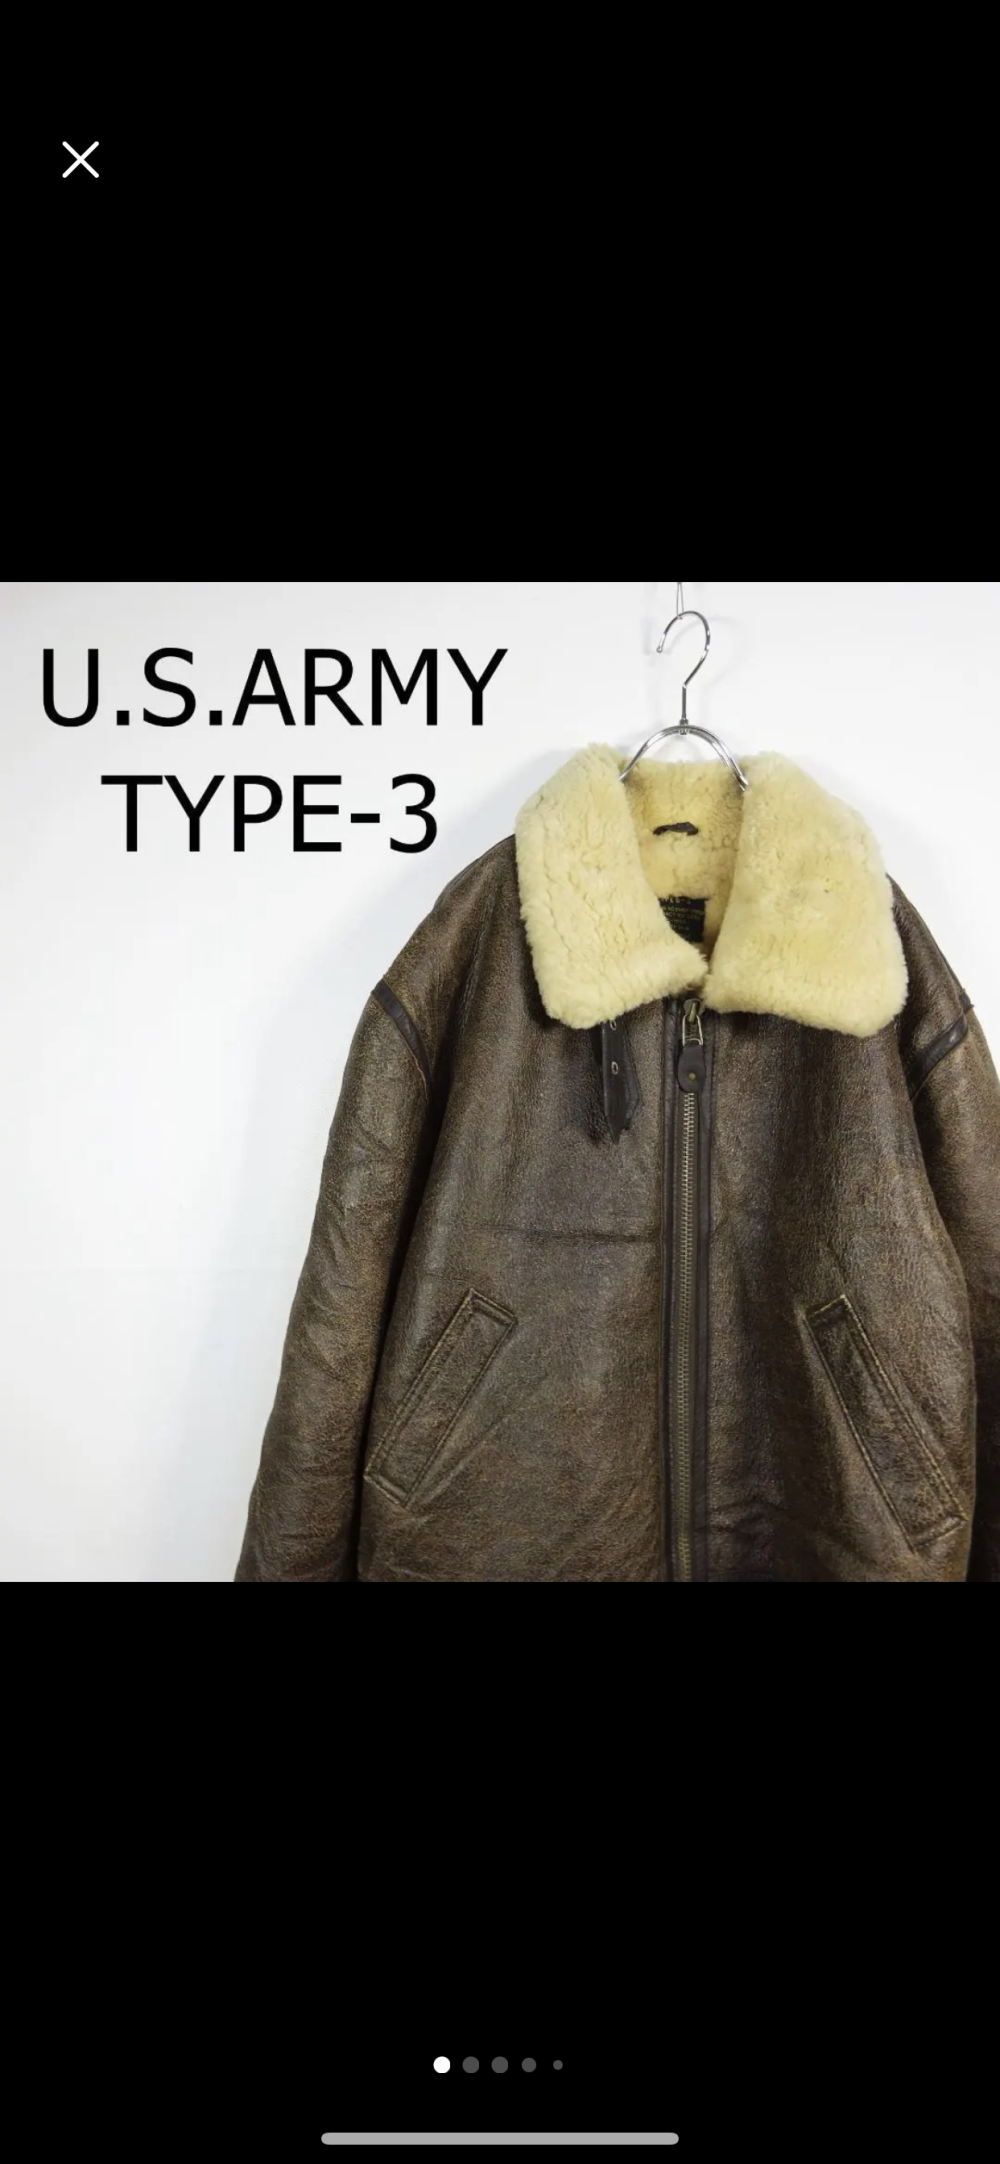 U.S.ARMY TYPEB-3 レザージャケット サイズ42 ブラウン 襟ボア